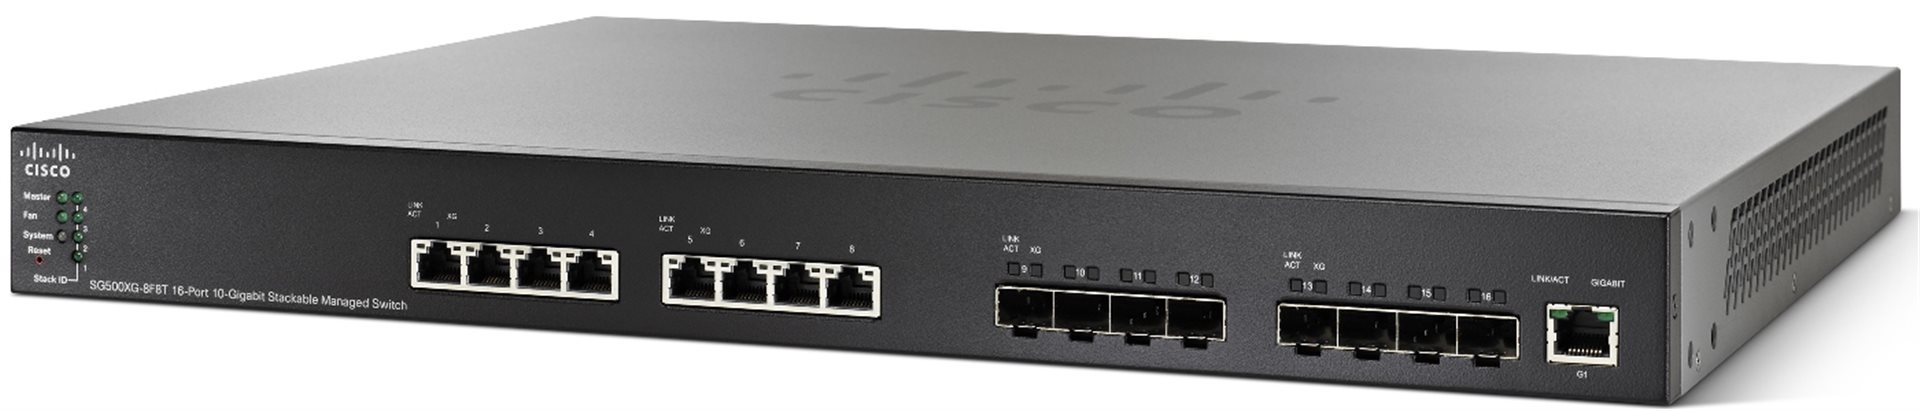 Cisco SG500XG-8F8T-K9 16-port 10-Gigabit Stackable Managed Switch